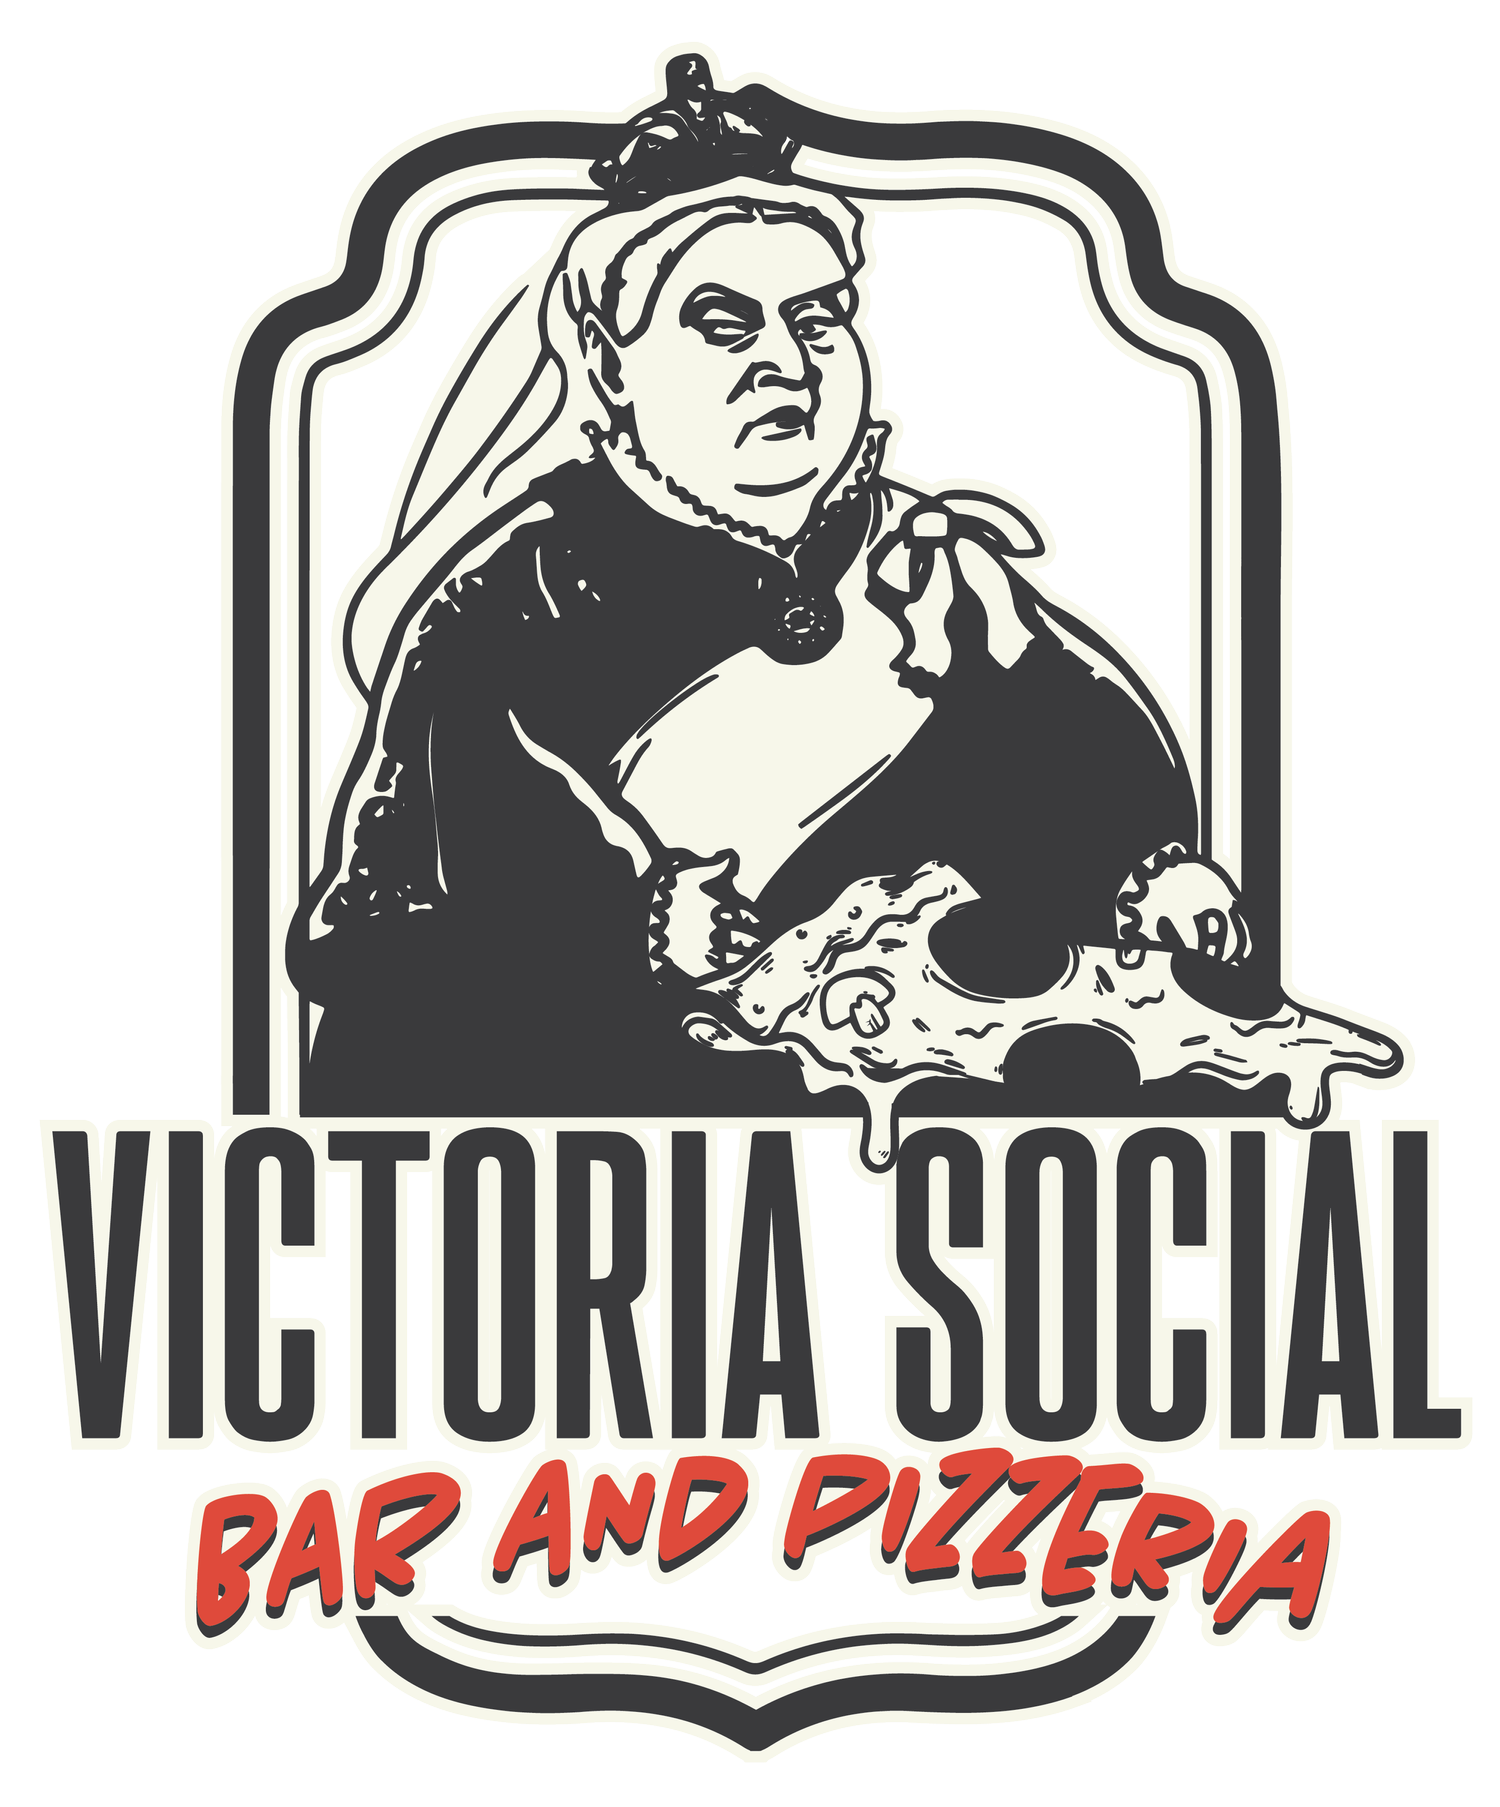 Victoria Social